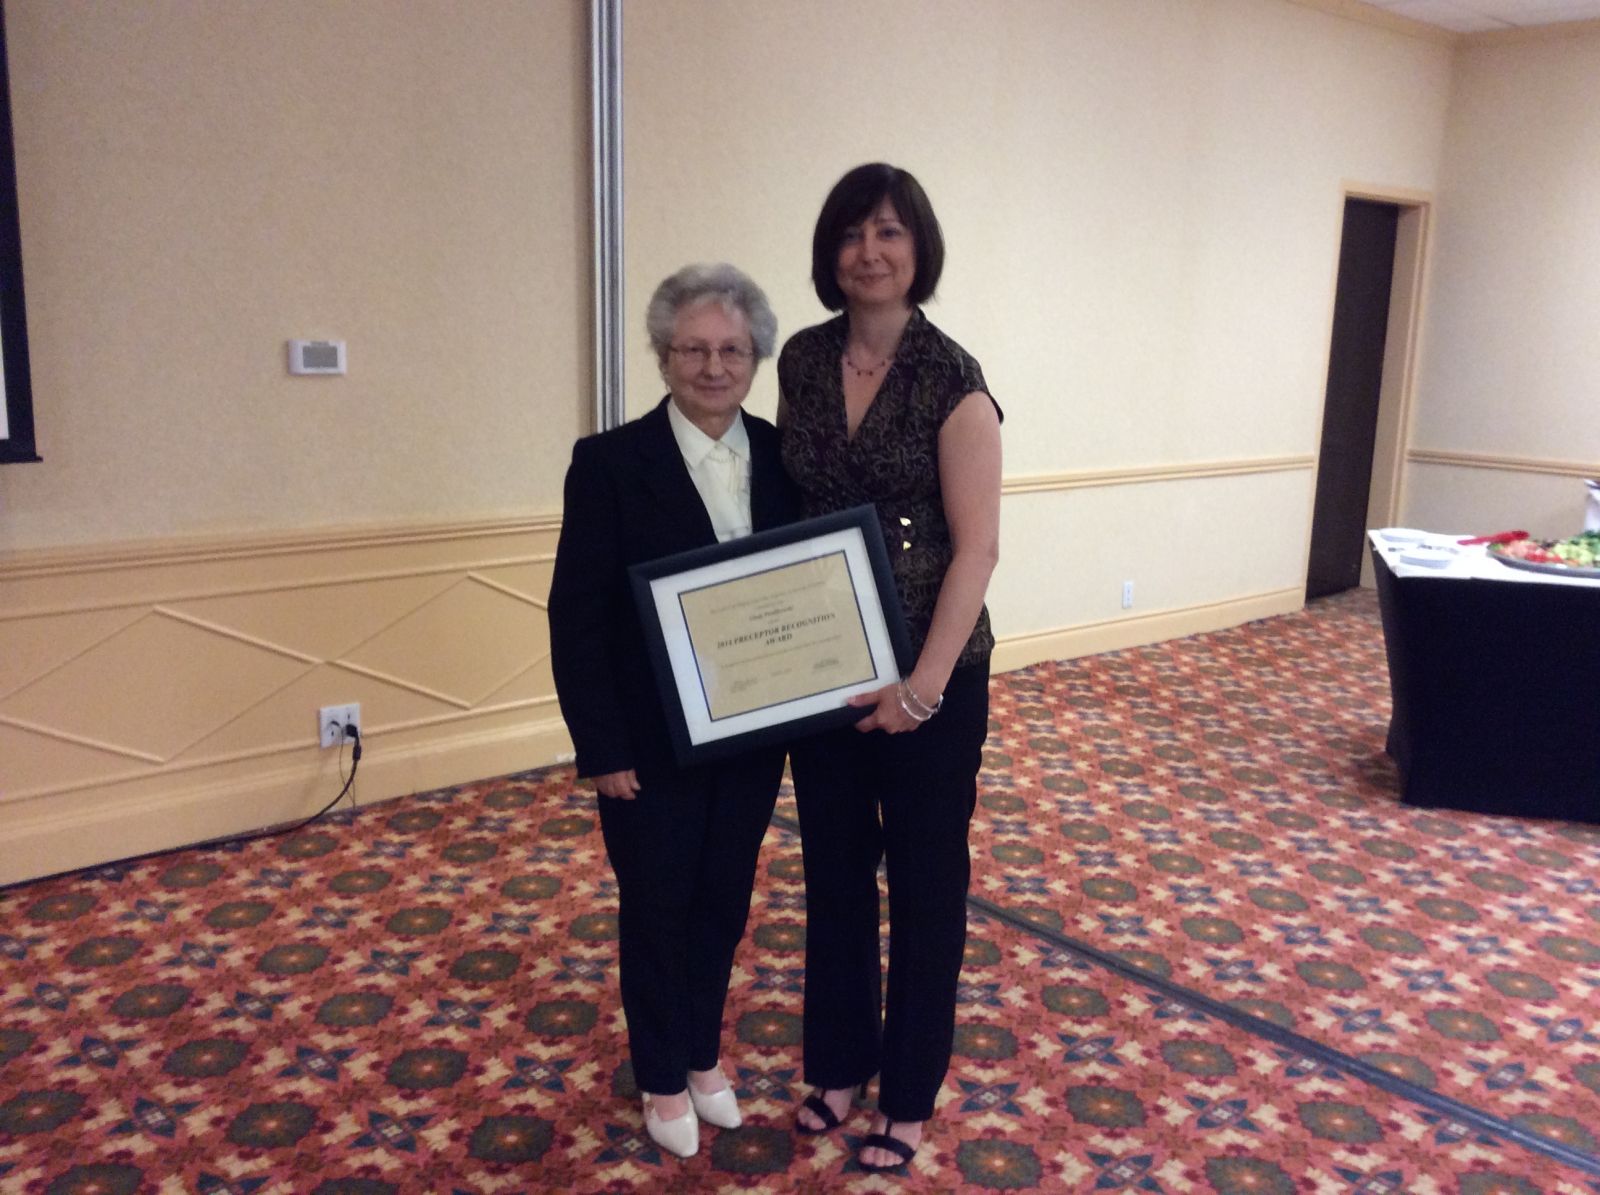 Cindy Pawlikowski receiving her award